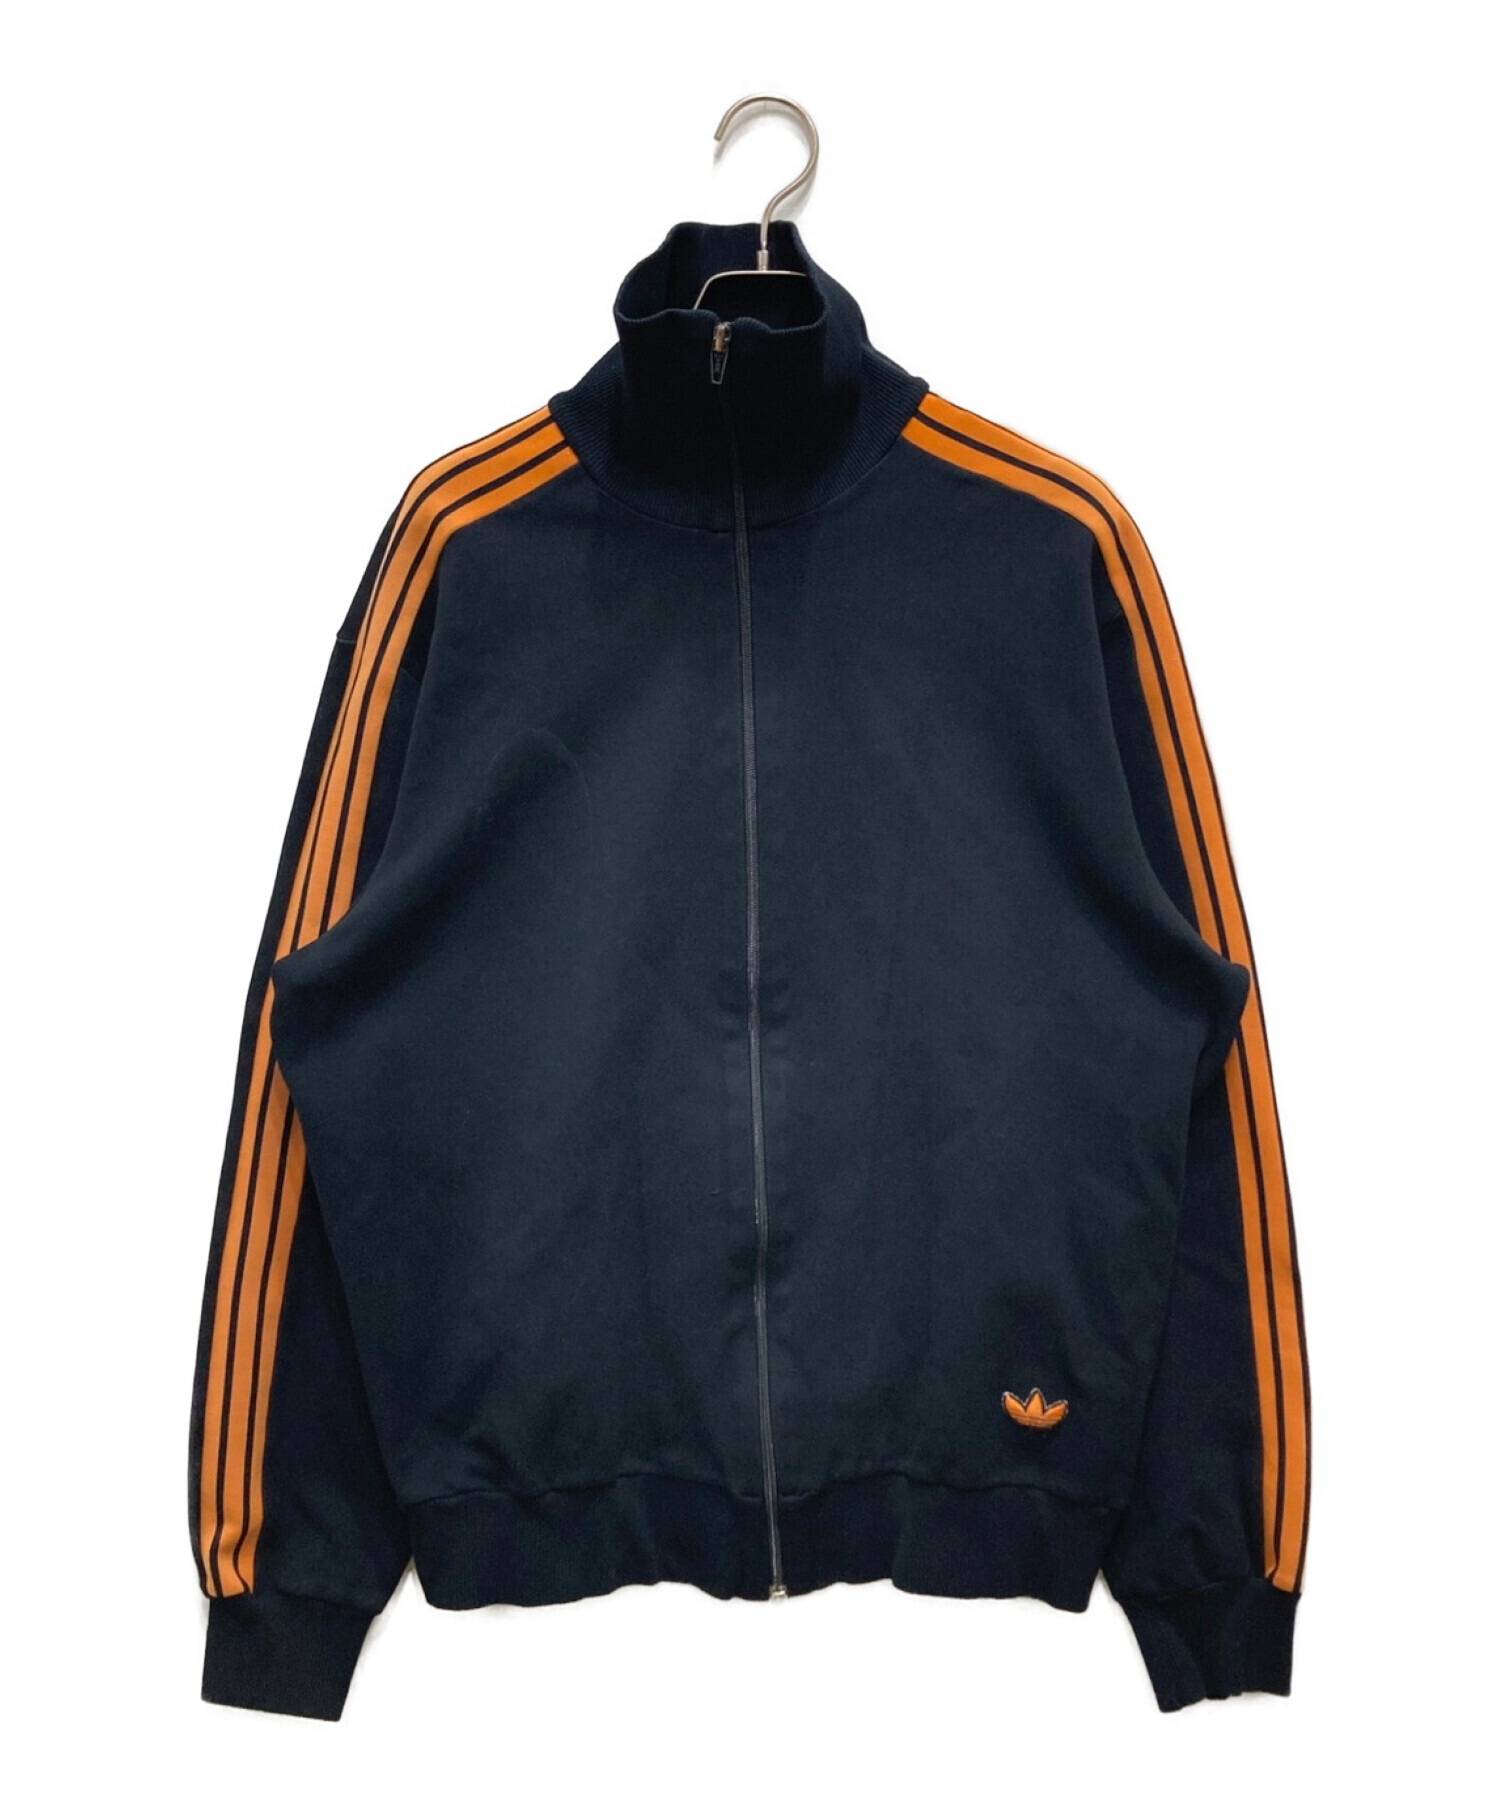 adidas (アディダス) ヴィンテージトラックジャケット ブラック×オレンジ サイズ:5